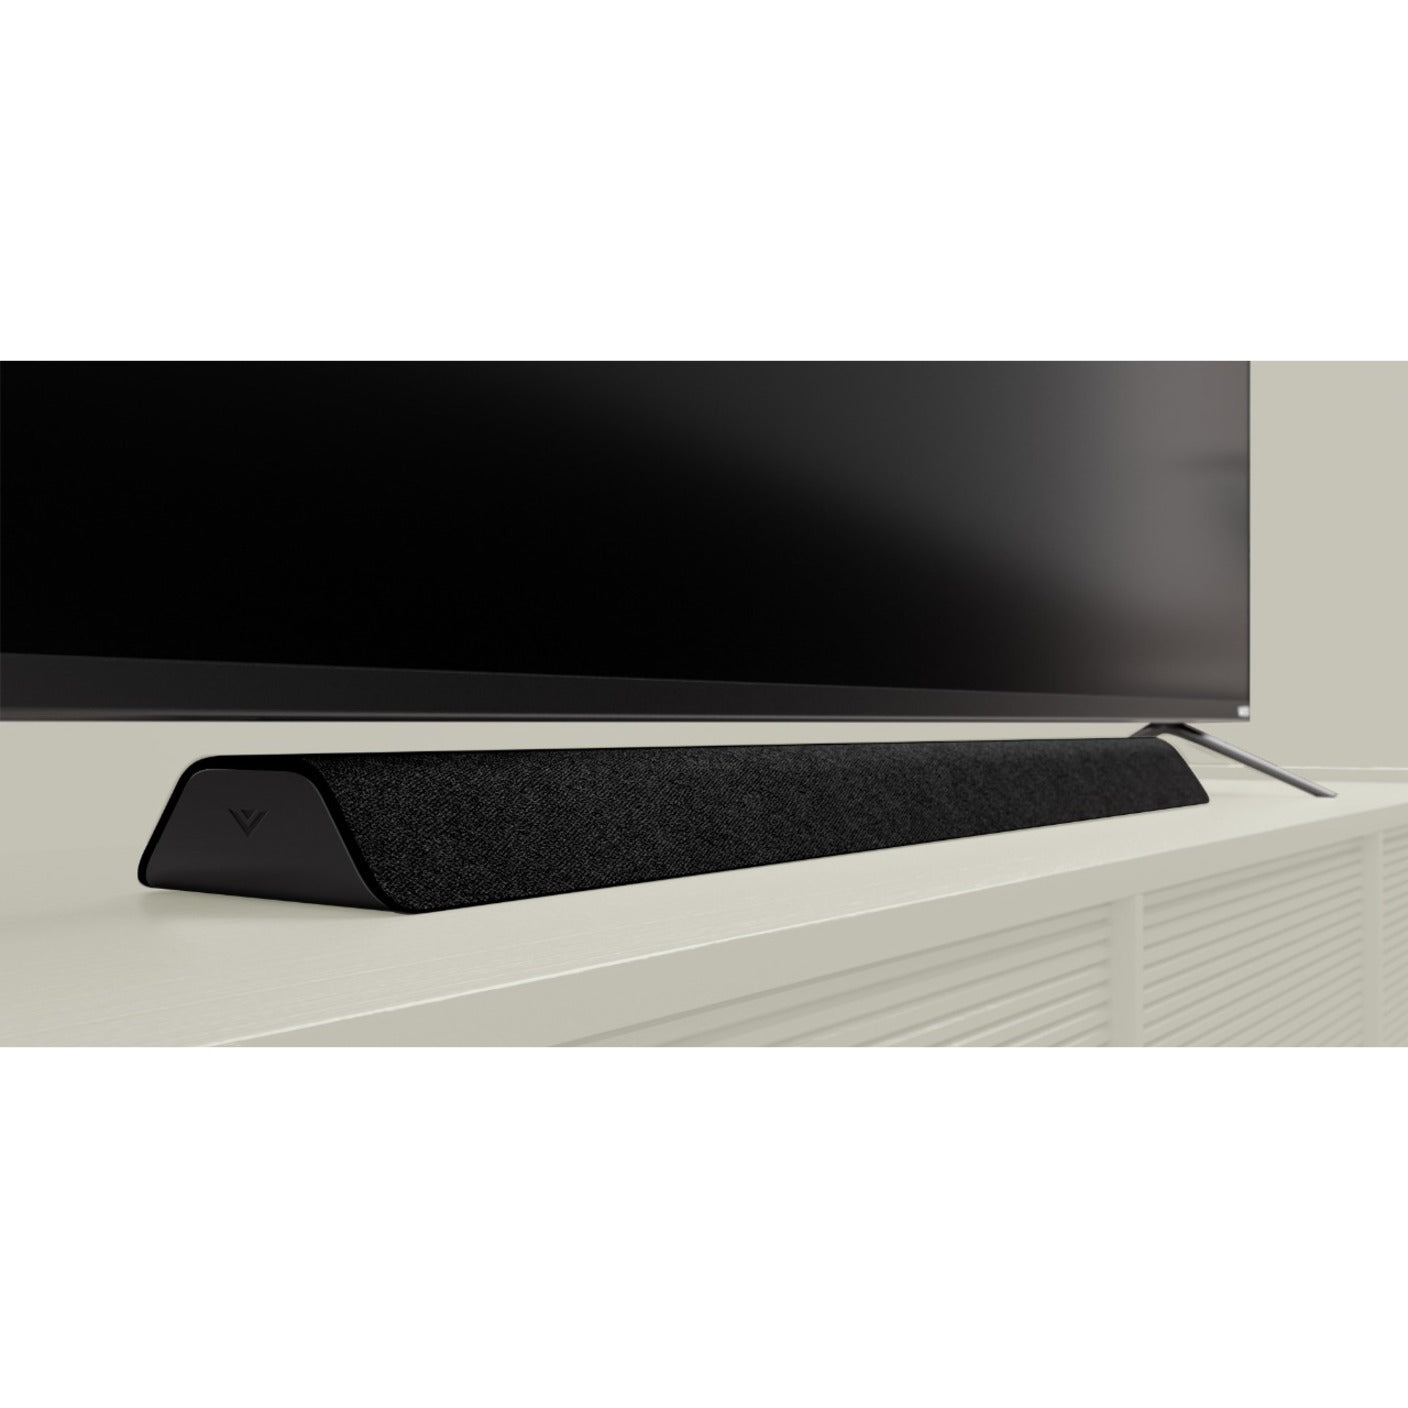 VIZIO V21D-J8 V-Series All-in-One 2.1 Home Theater Sound Bar, Bluetooth, Voice Command, Remote Control